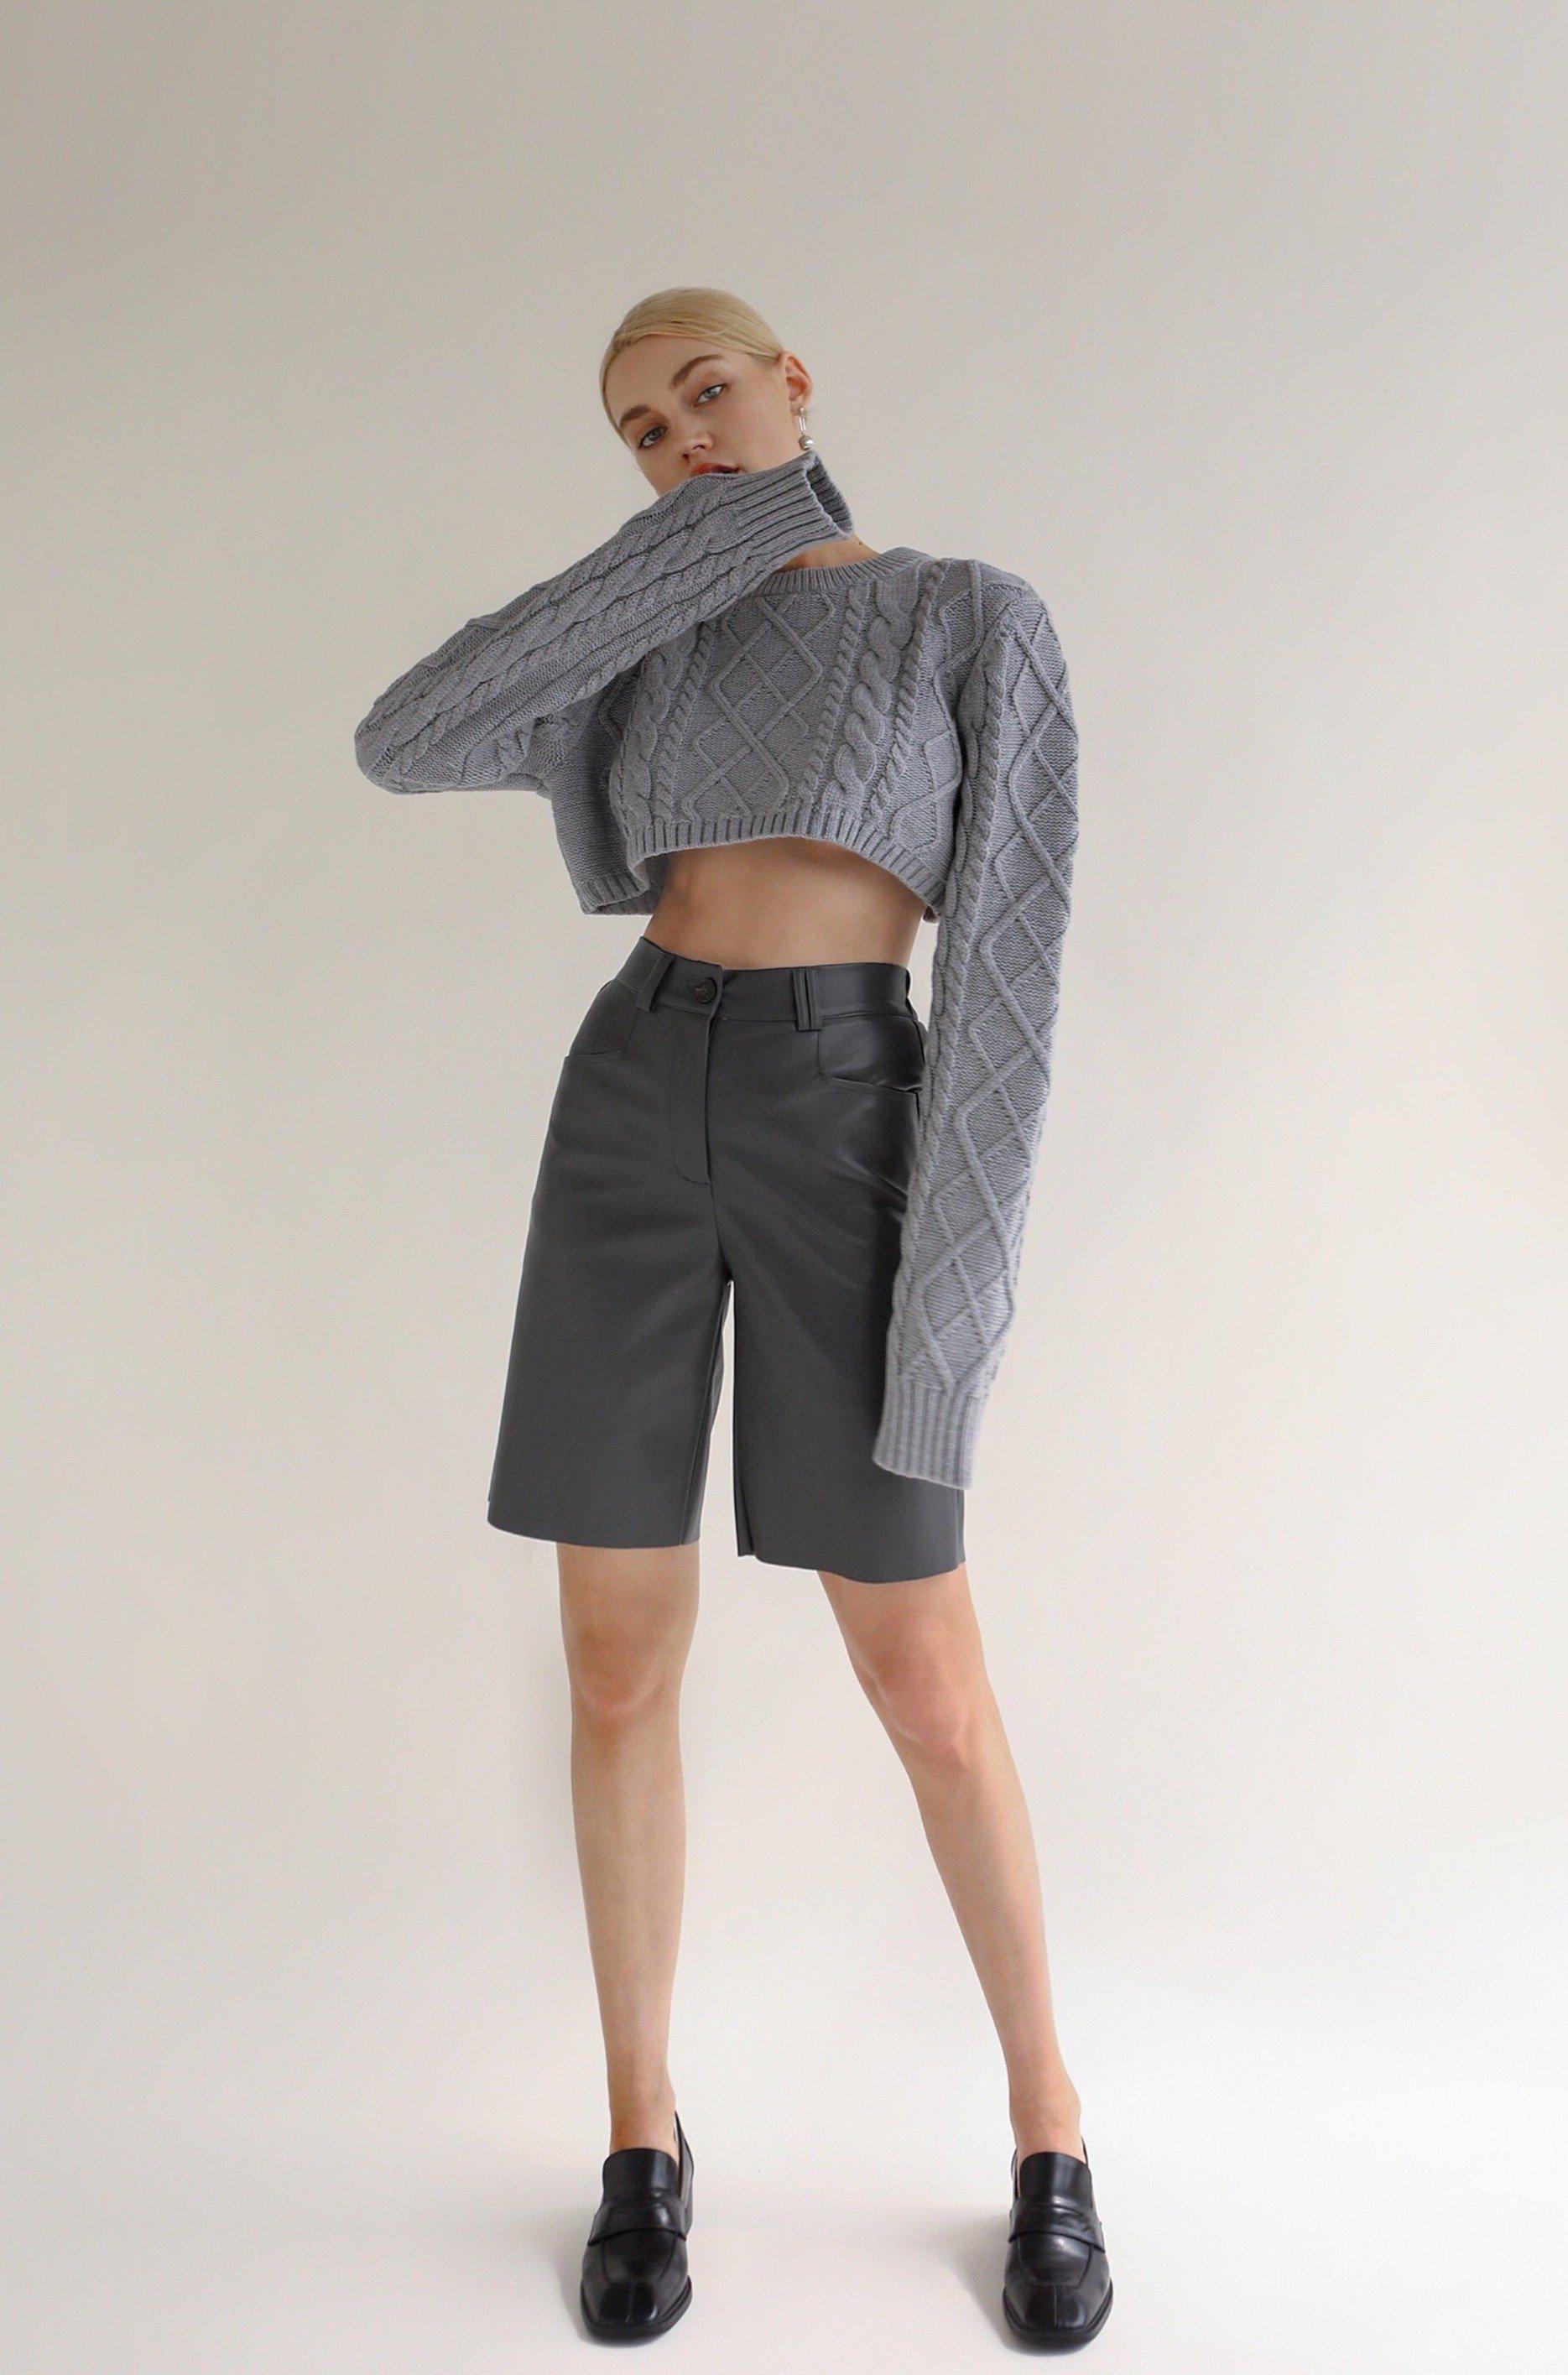 Life Style Pu Shorts - Dark Grey